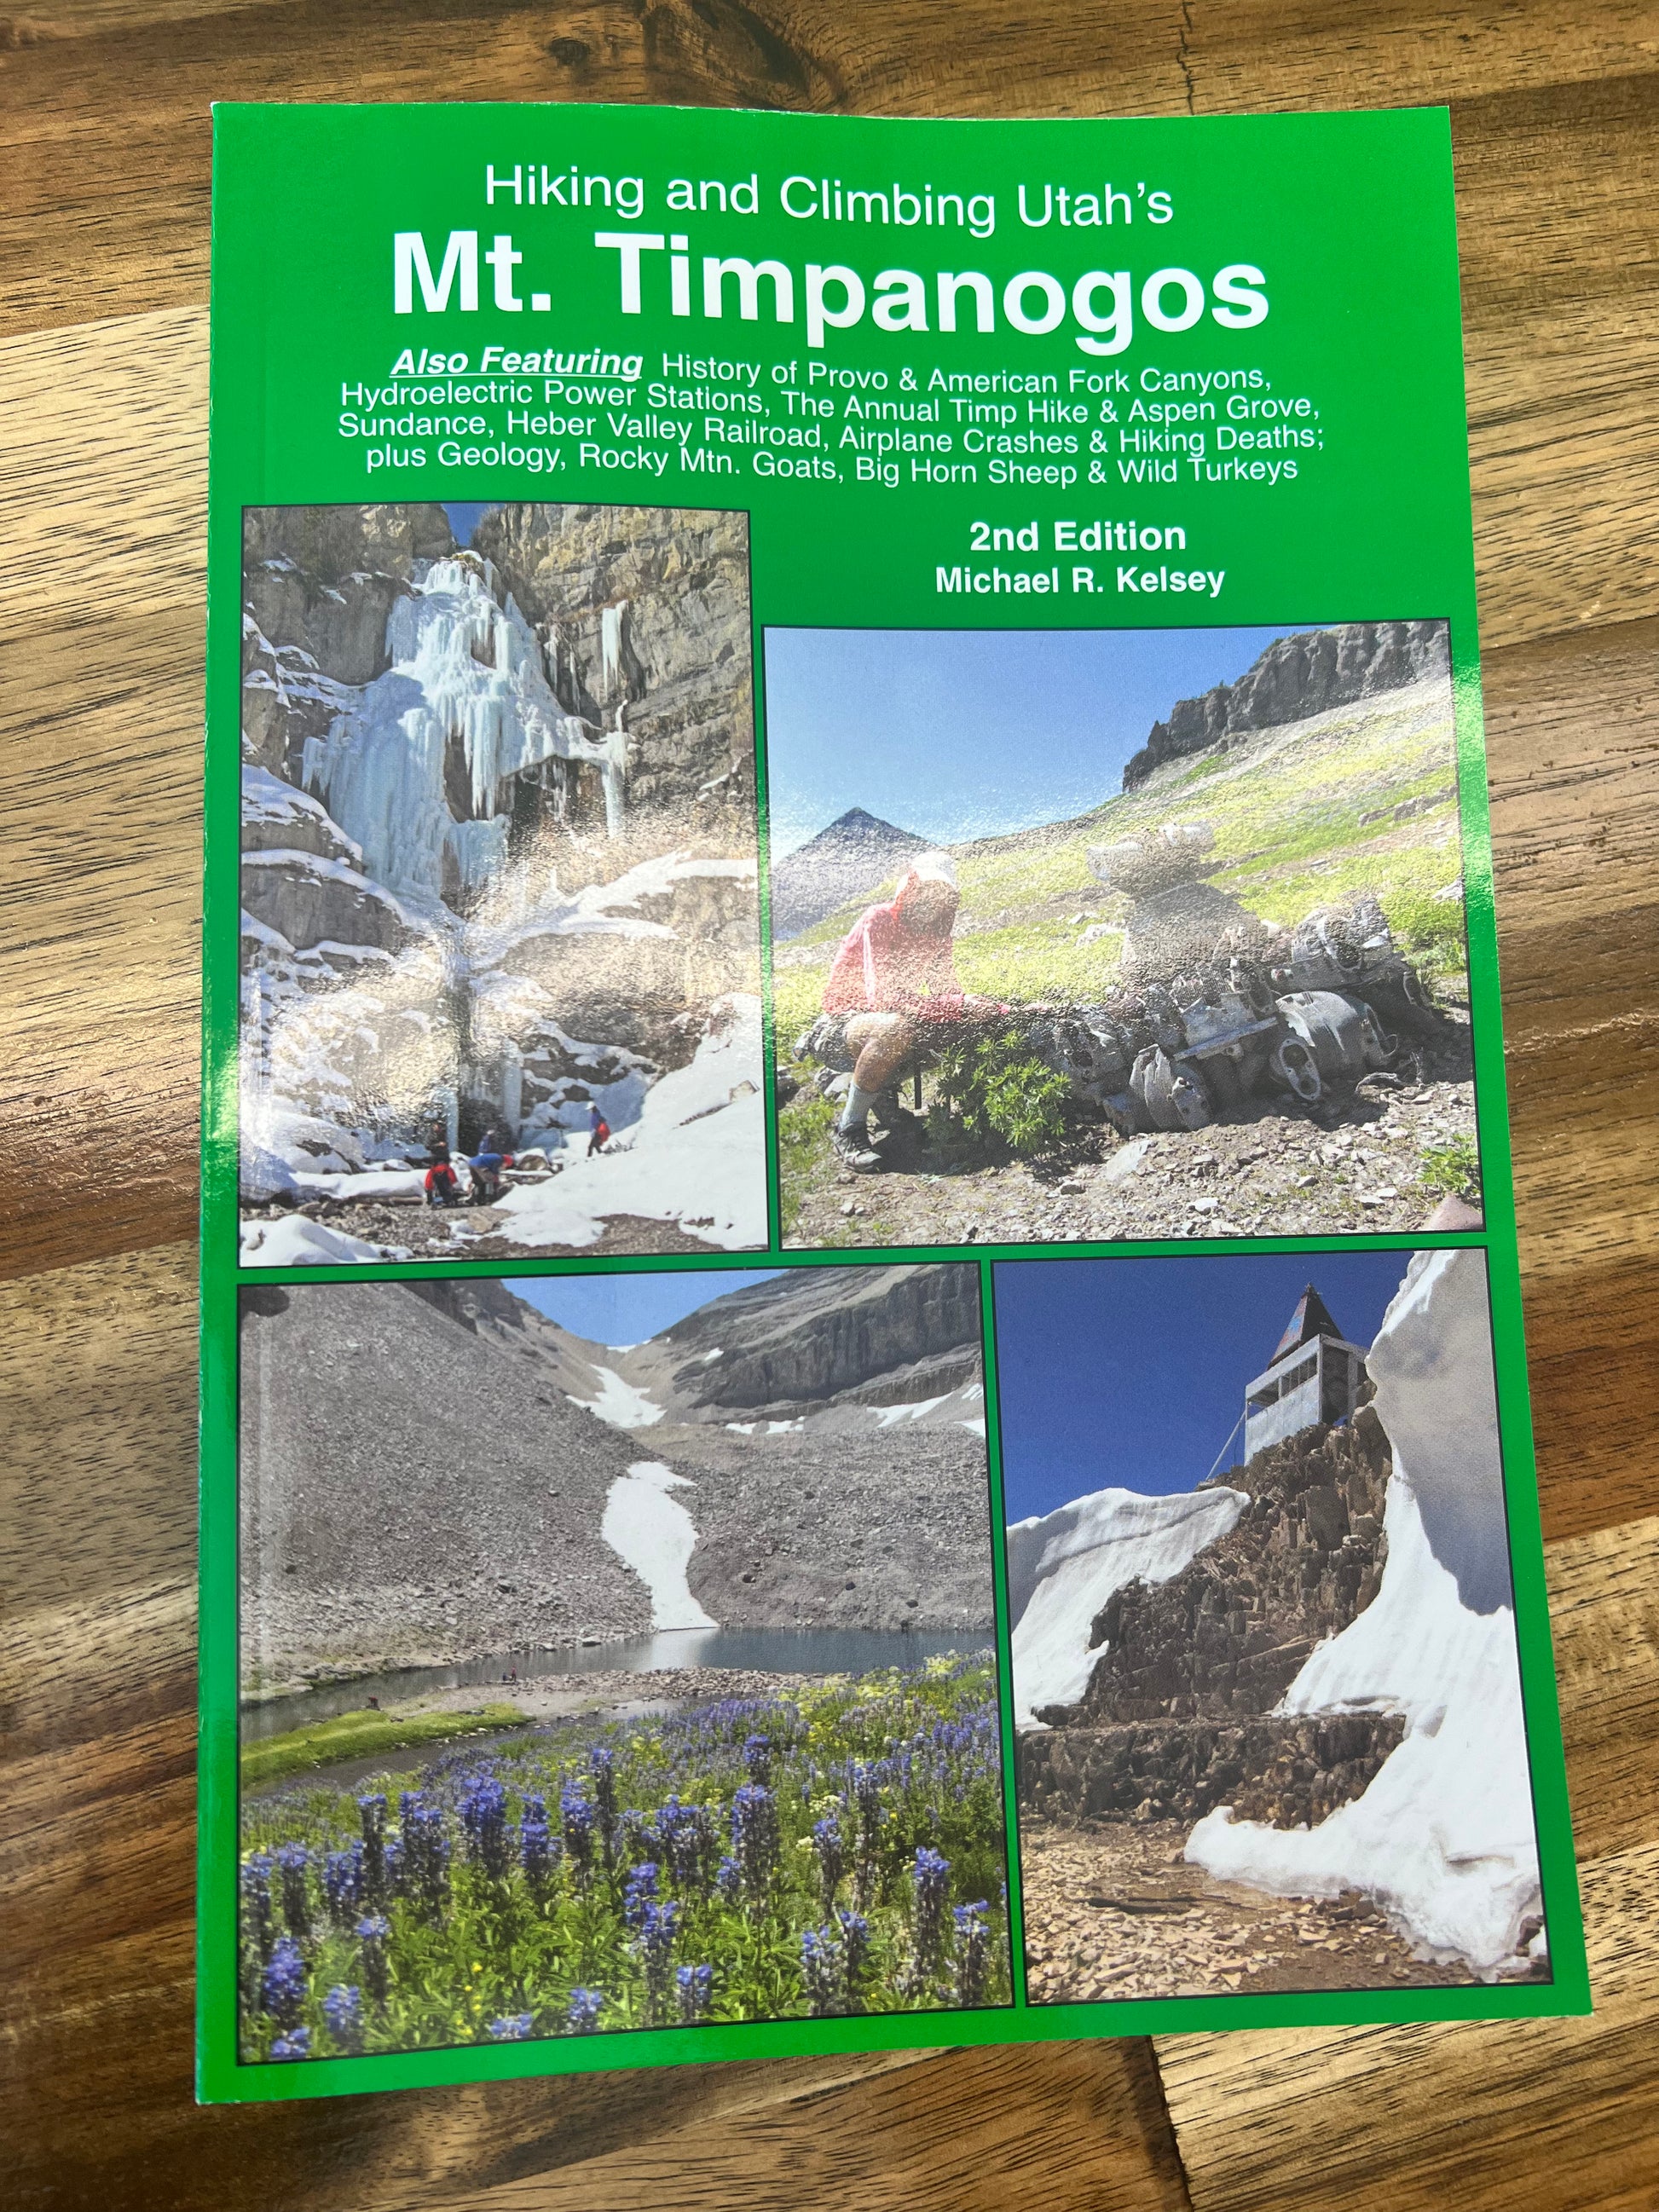 Timpanogos 40-oz Tumbler – Timpanogos Hiking Co.